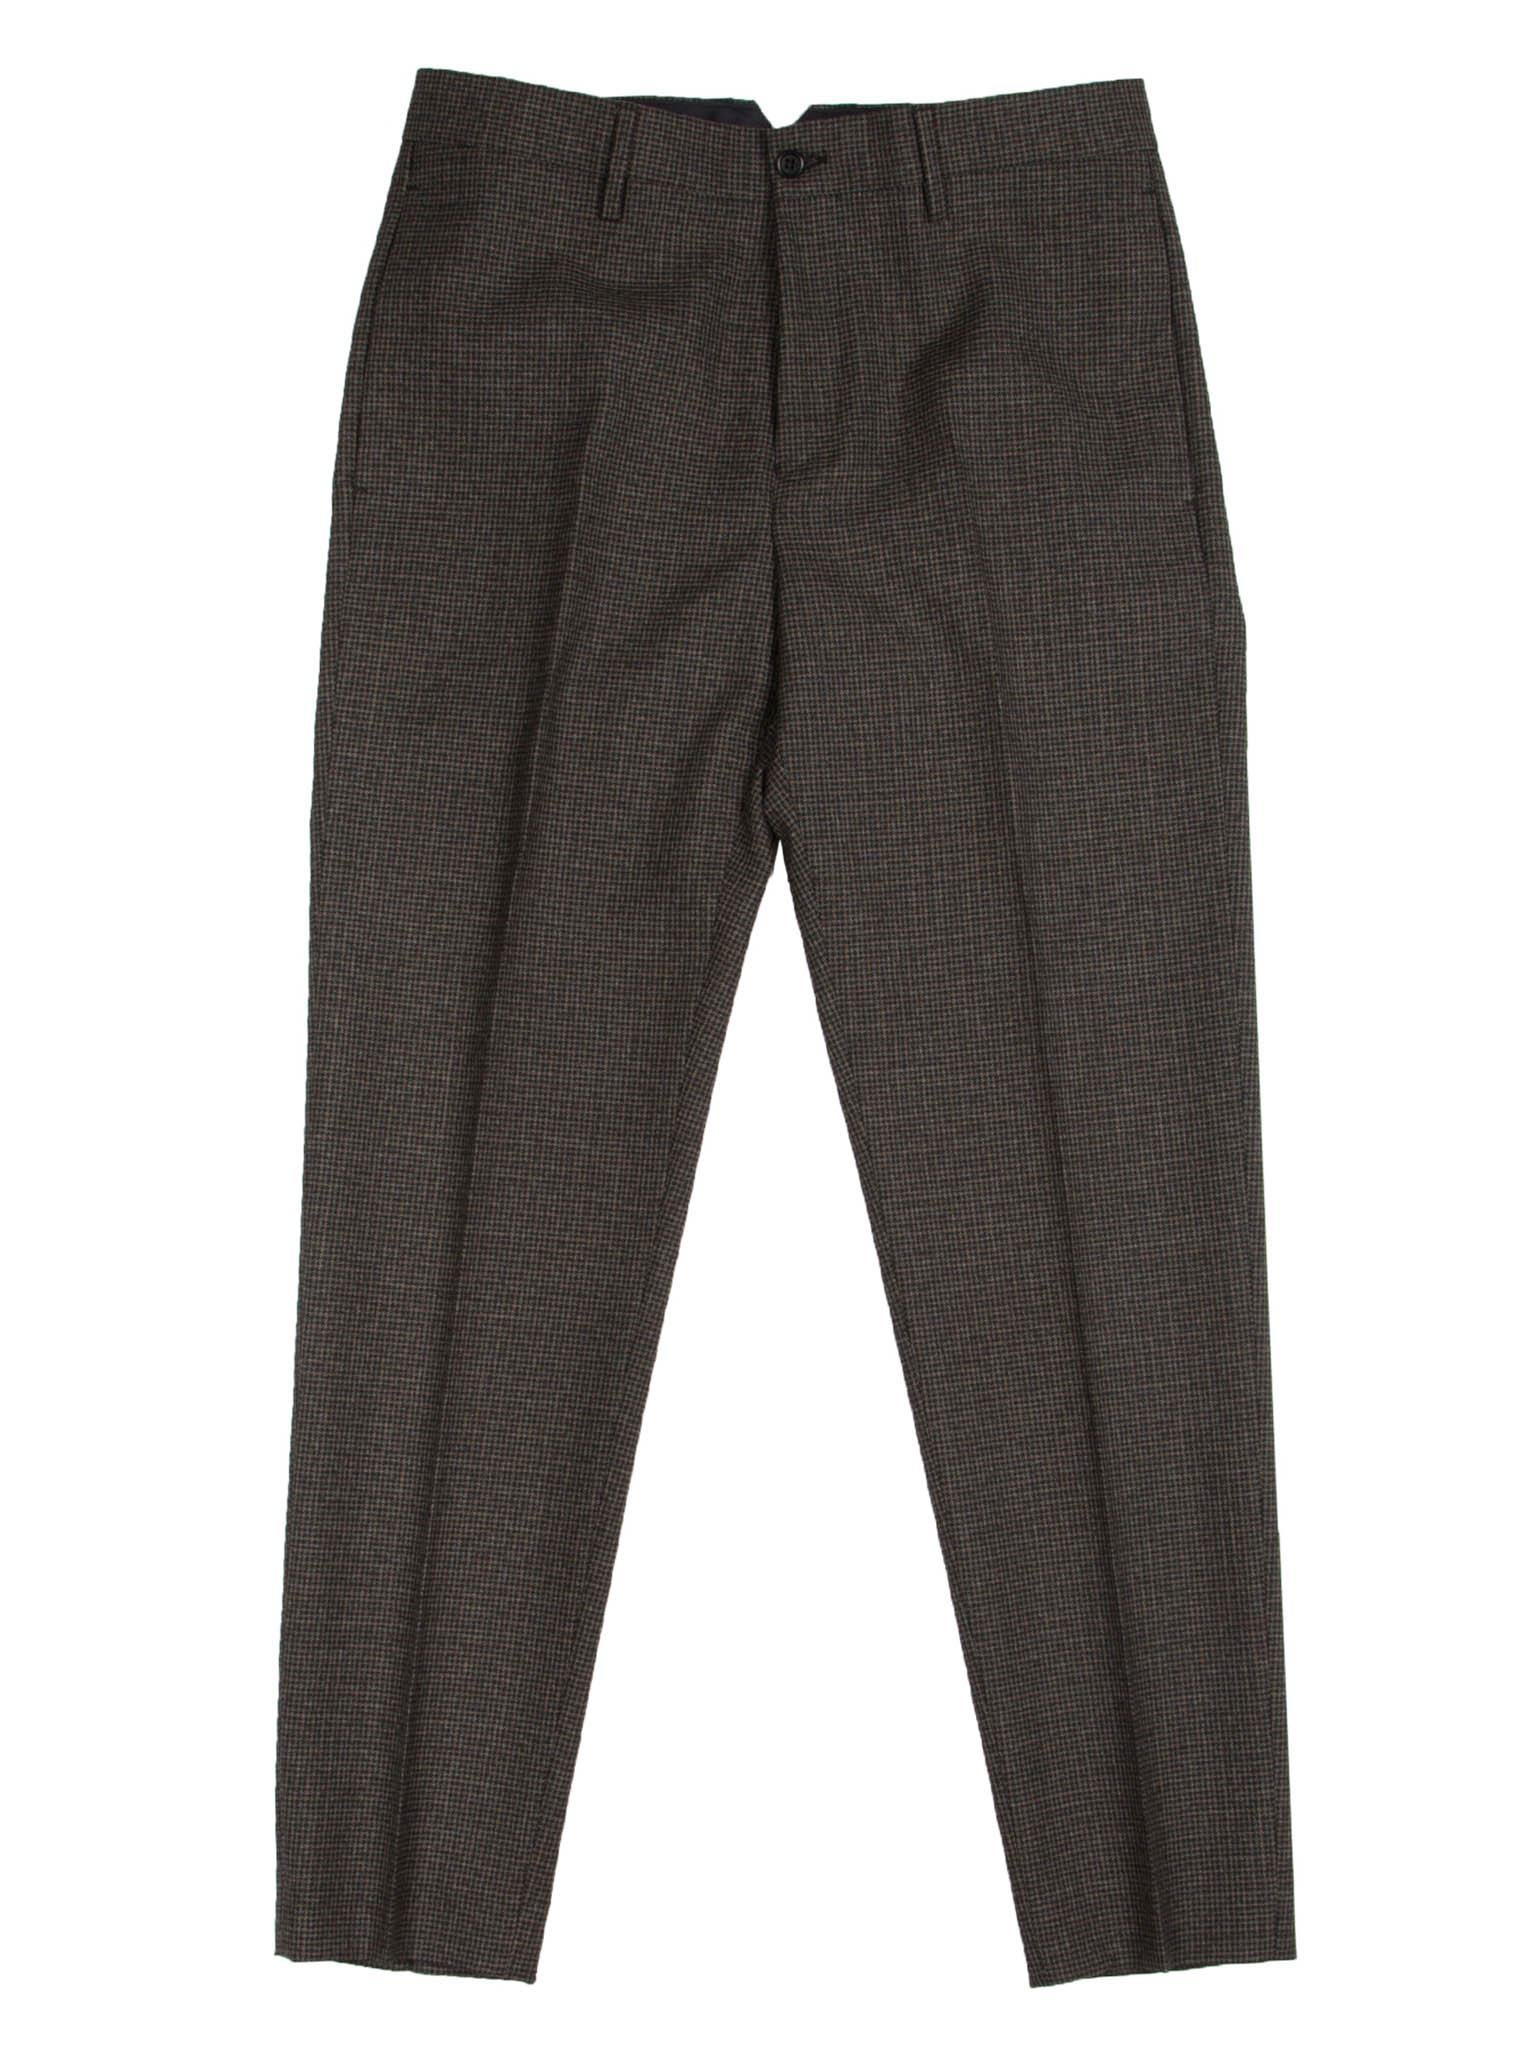 Acne checked wool trousers, £230, oki-ni.com